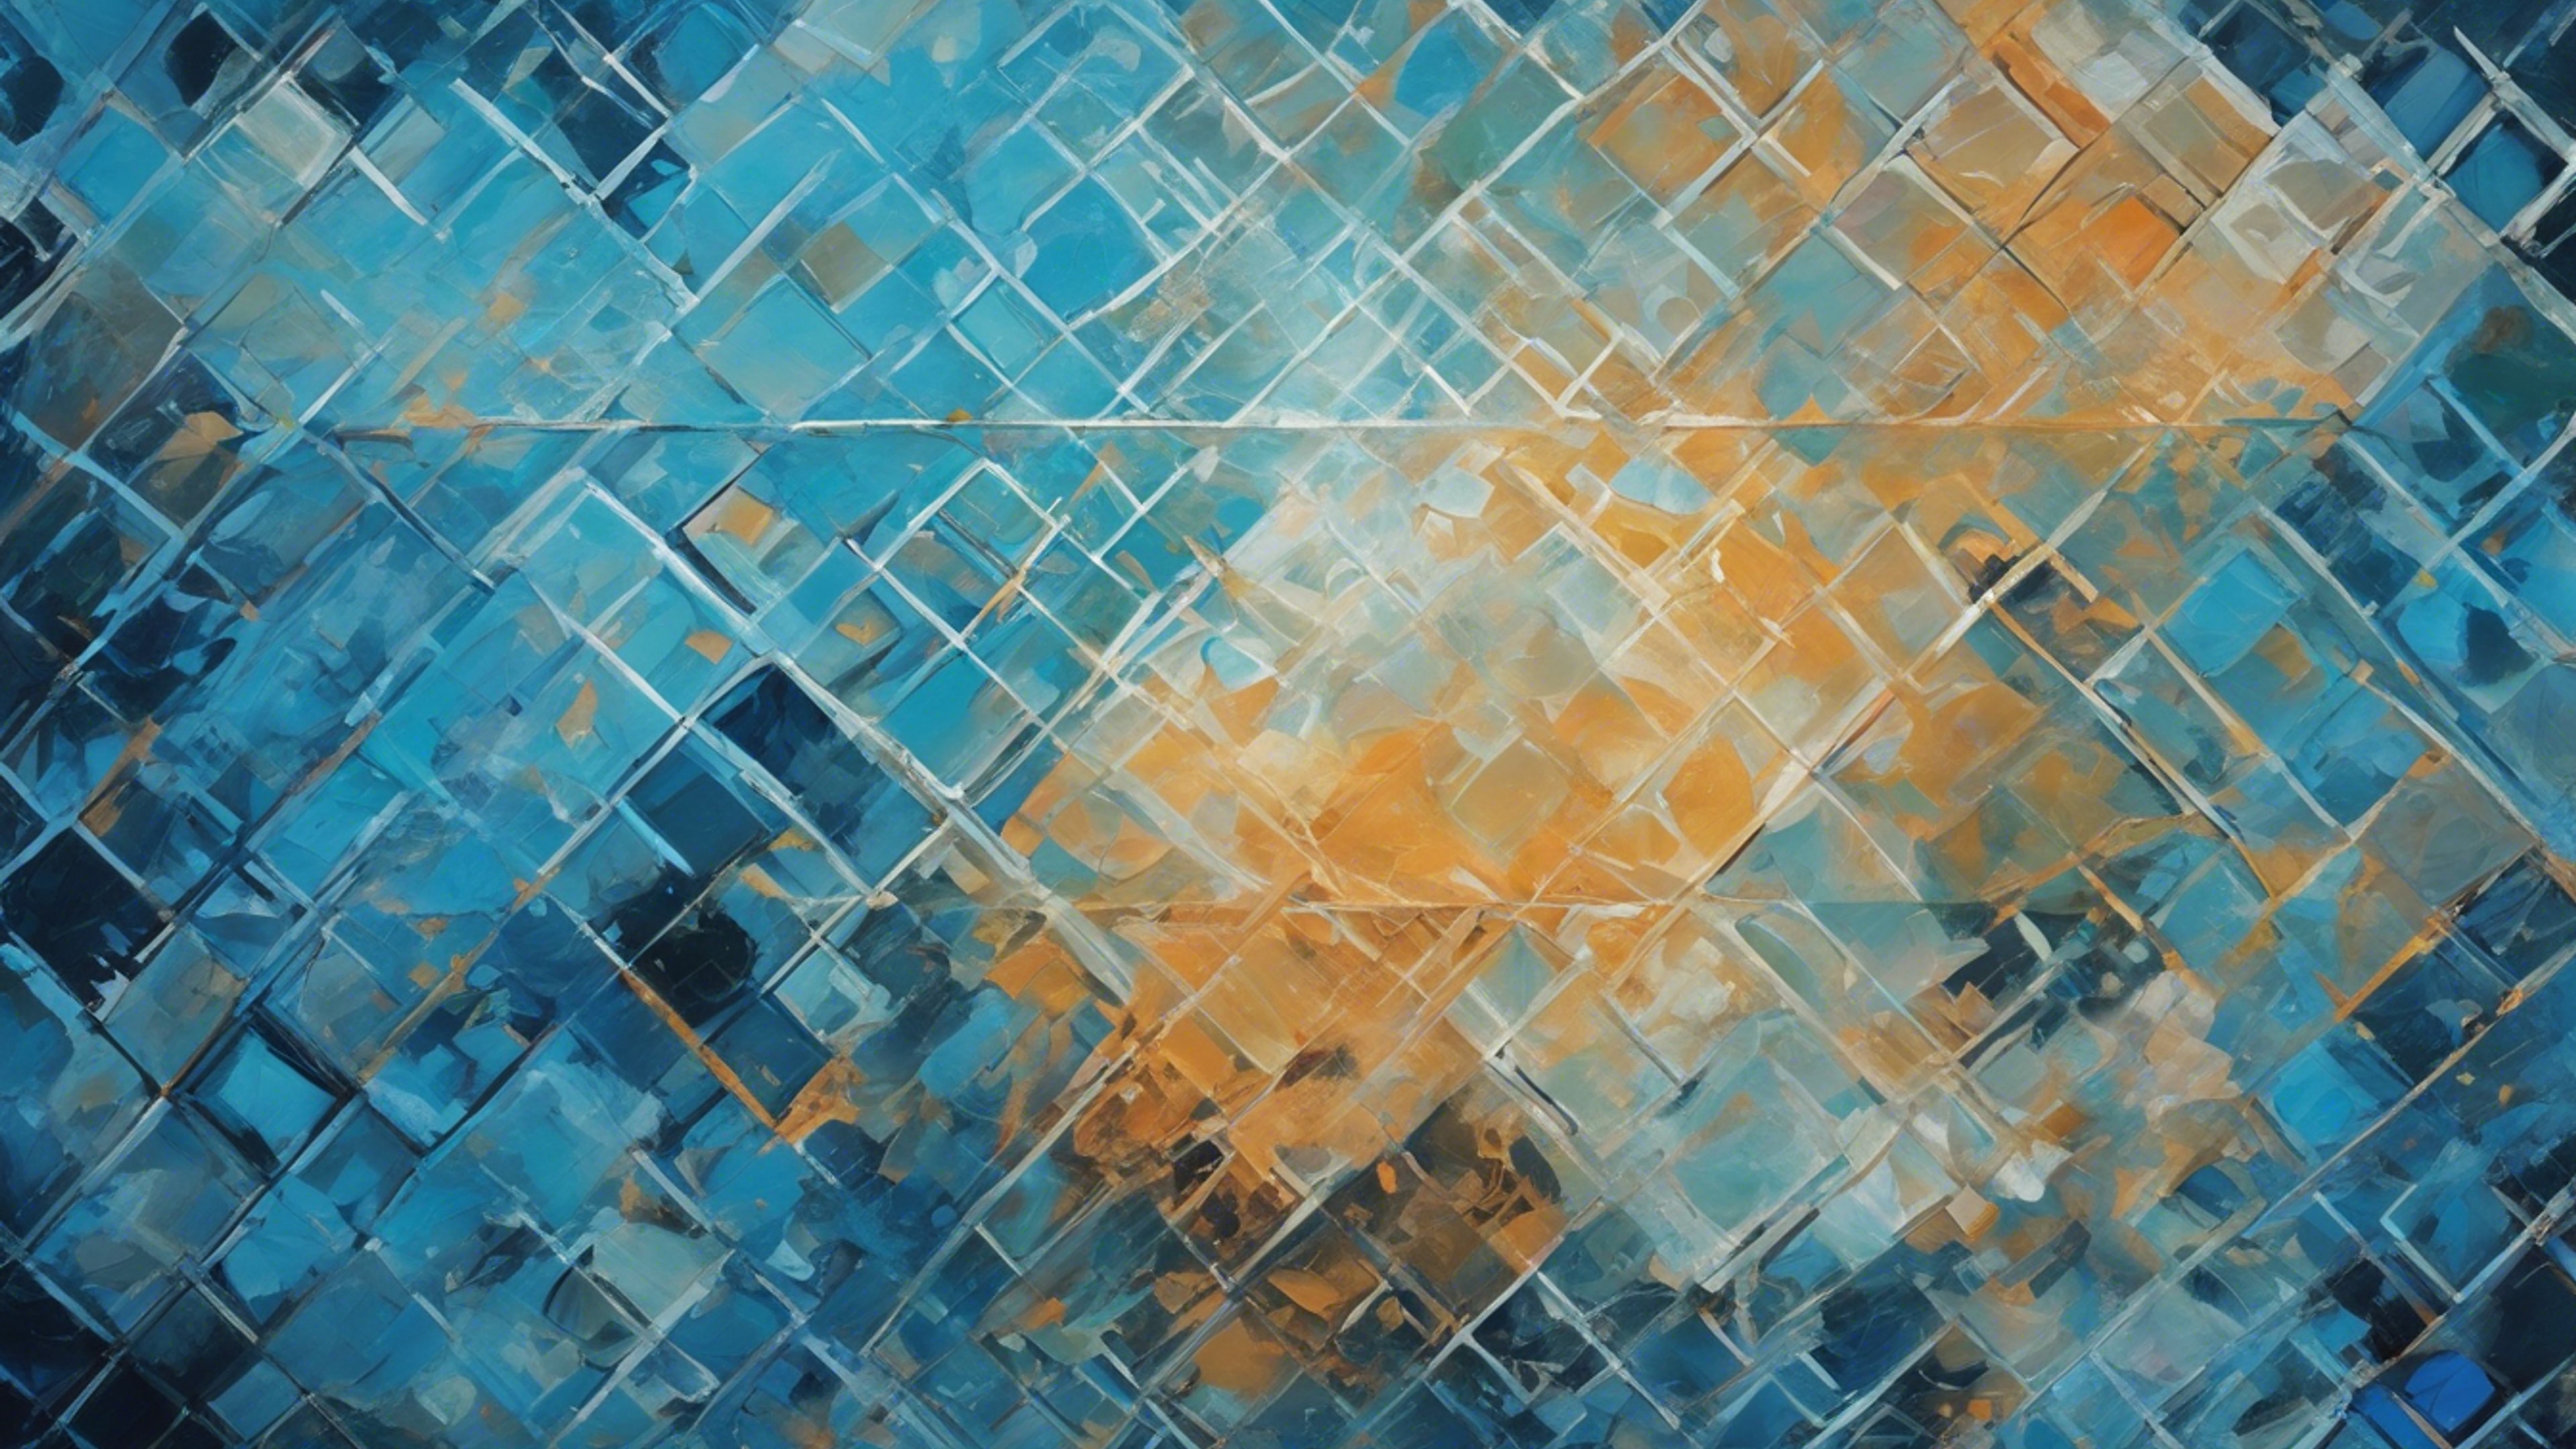 A cool blue geometric abstract painting Wallpaper[ac7eea7ca87f45839e46]